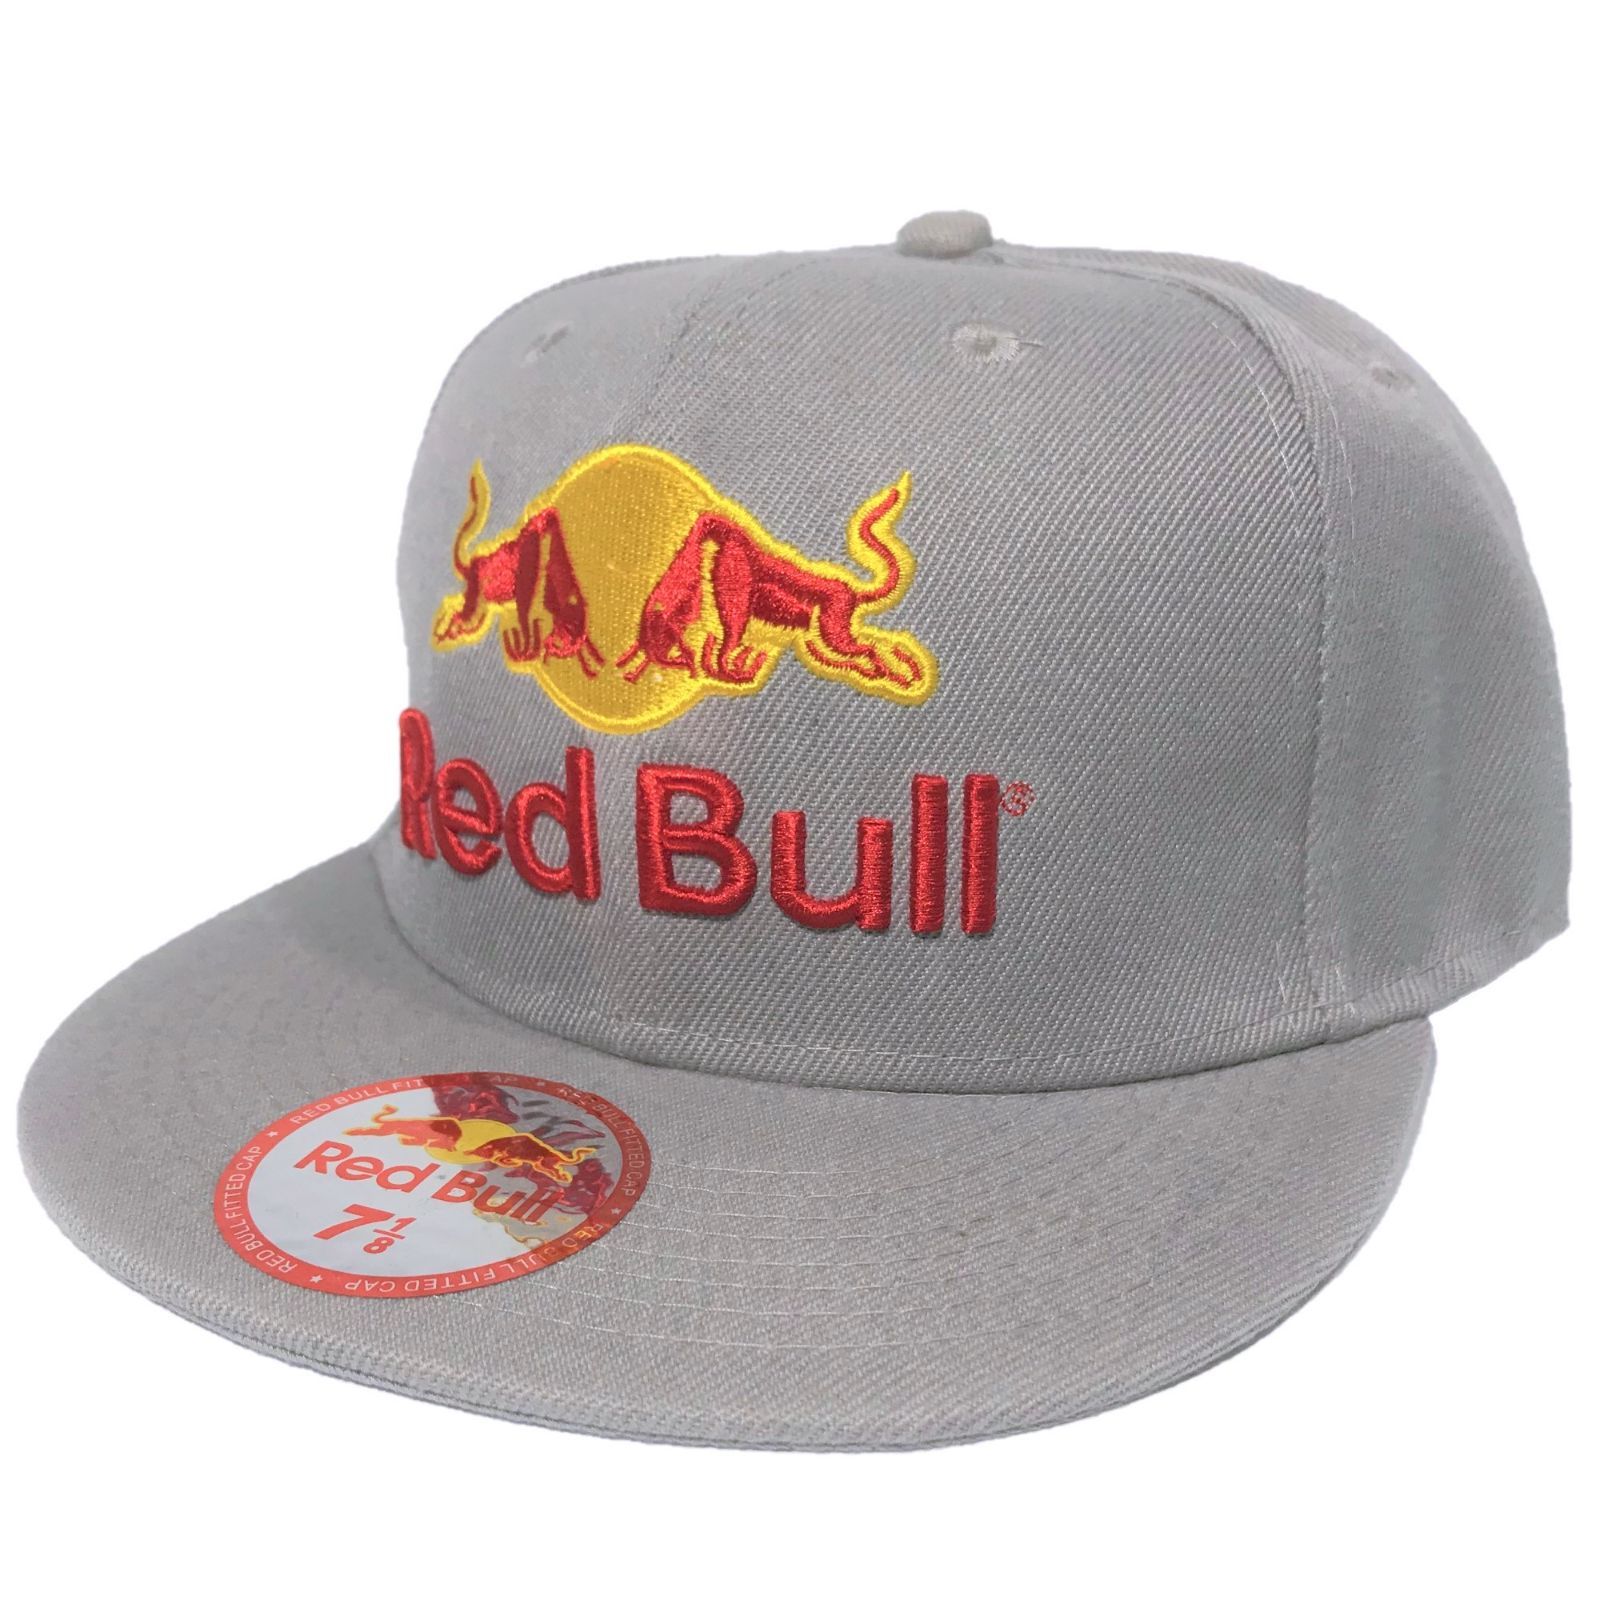 Red Bull レッドブル ロゴ ベースボールキャップ グレー